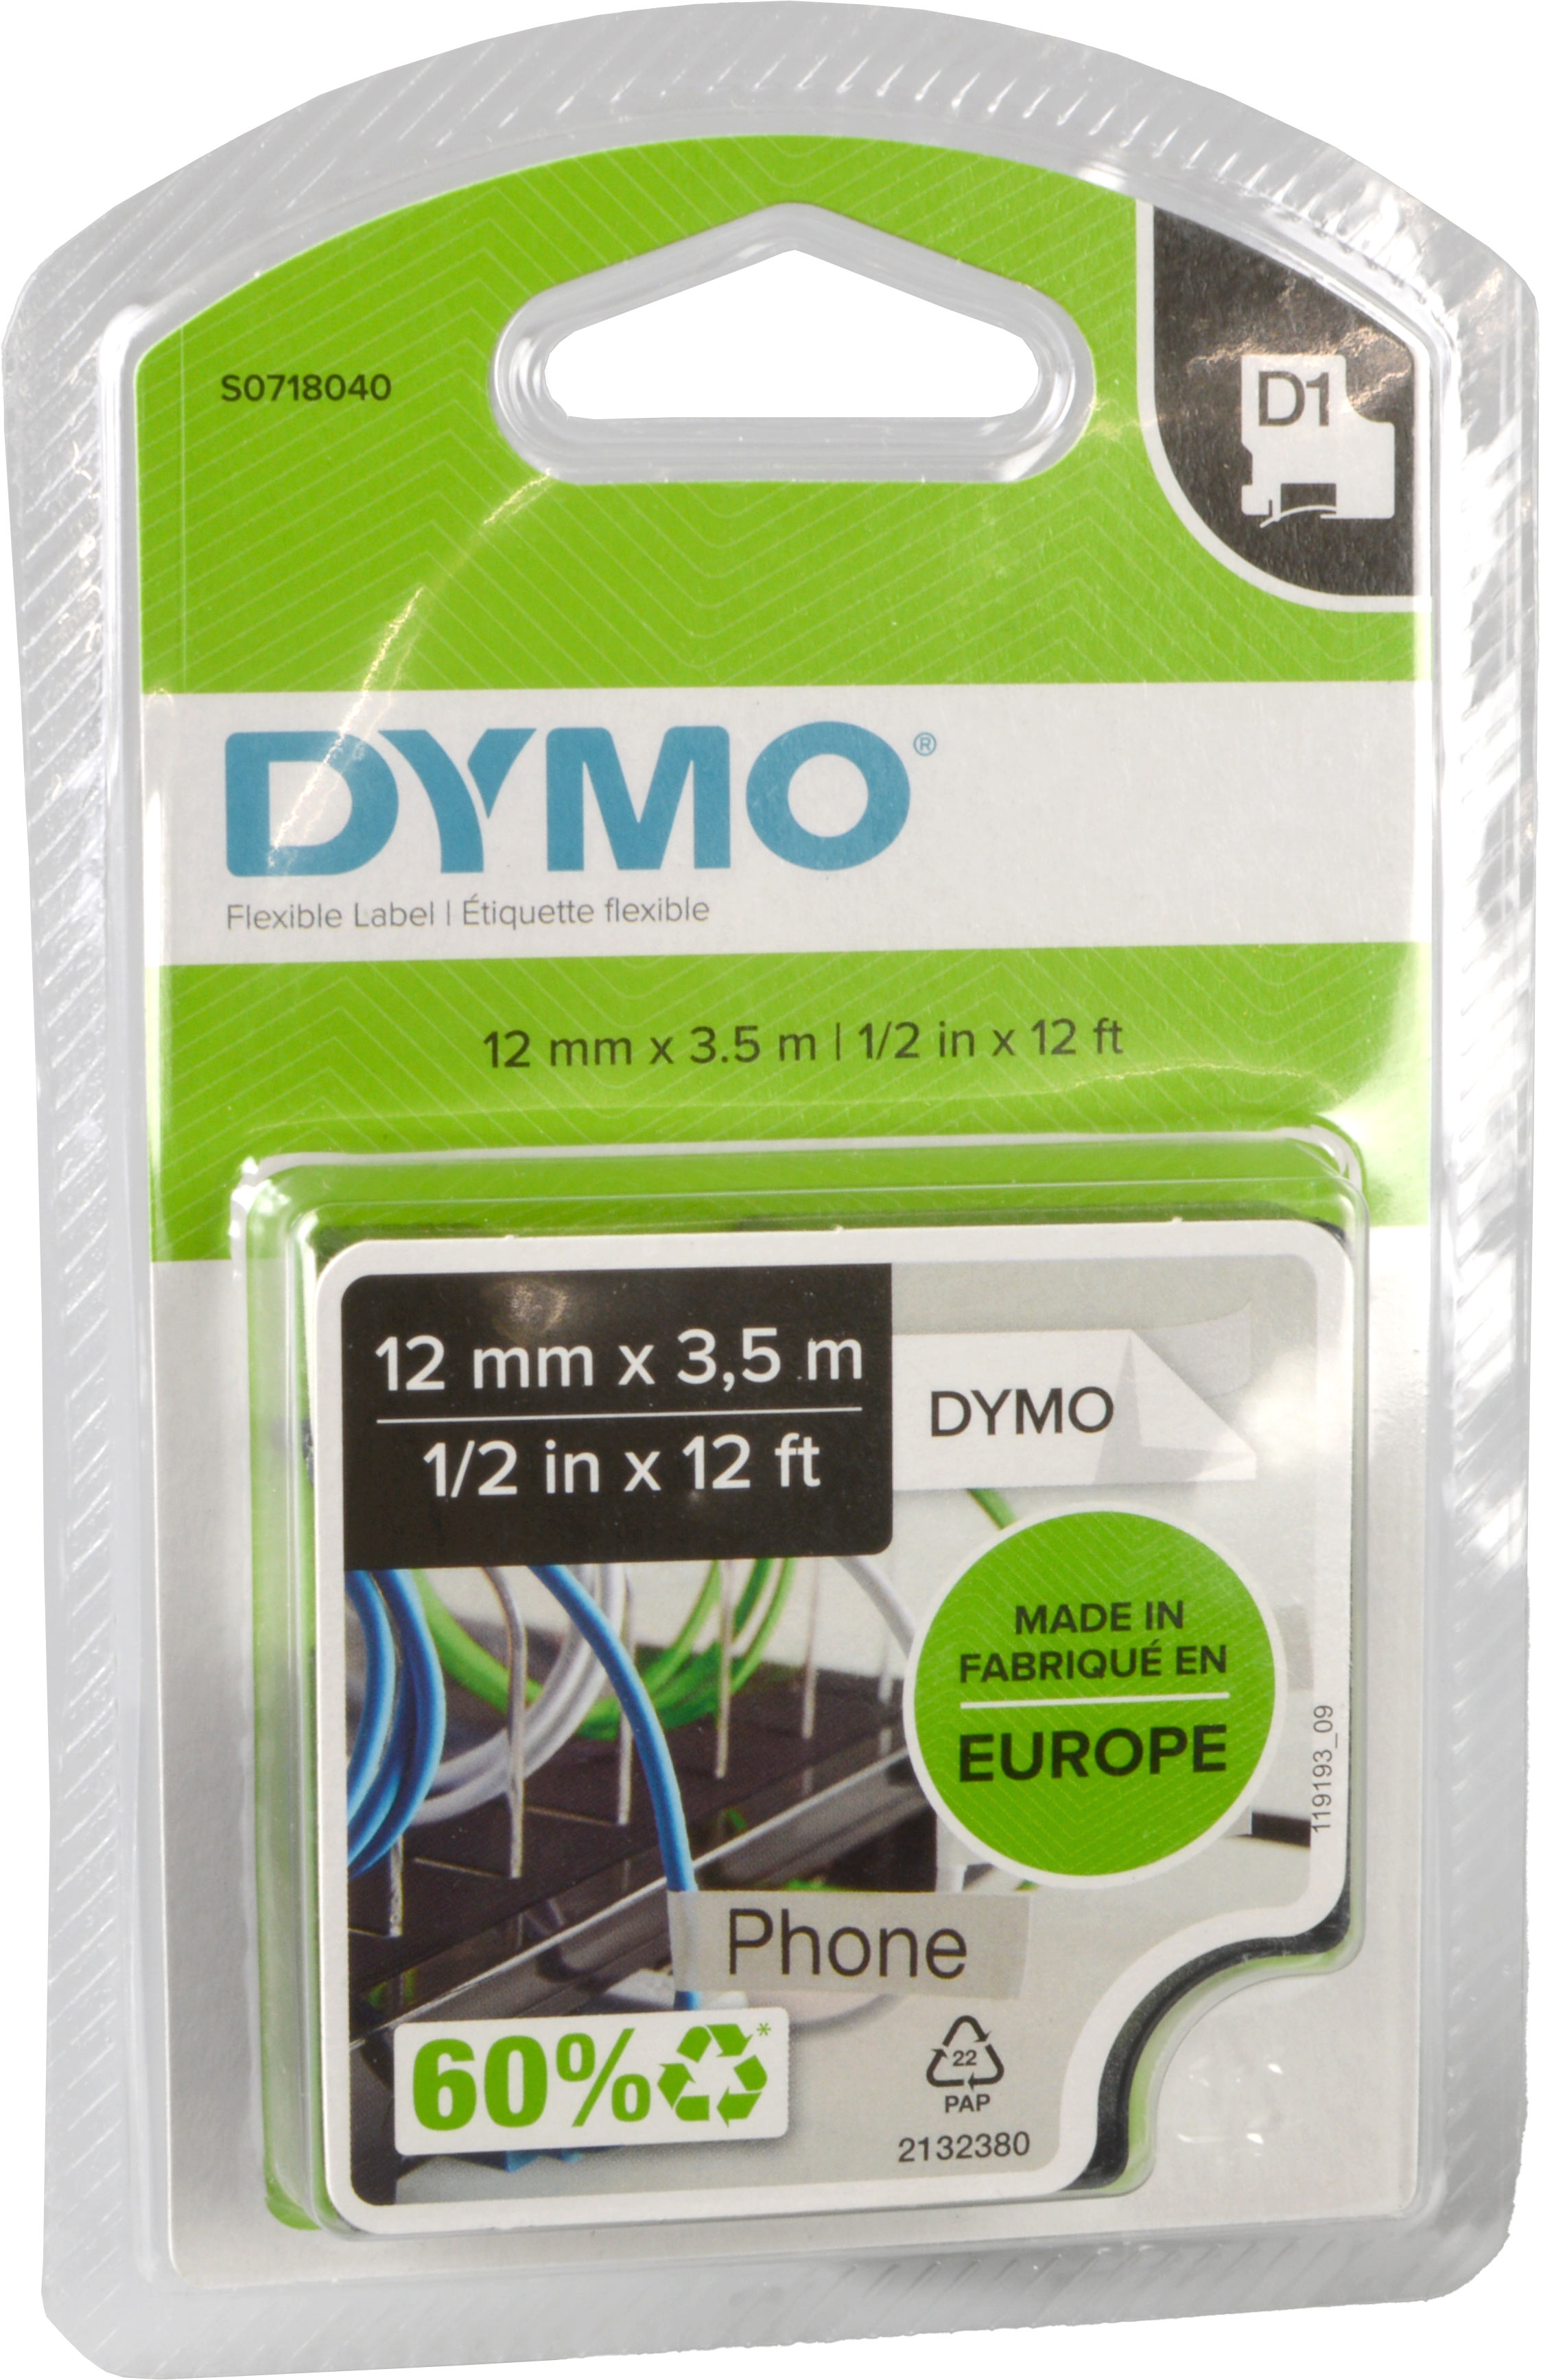 Dymo Originalband 16957  schwarz auf weiß  12mm x 3,5m  Nylon flexibel